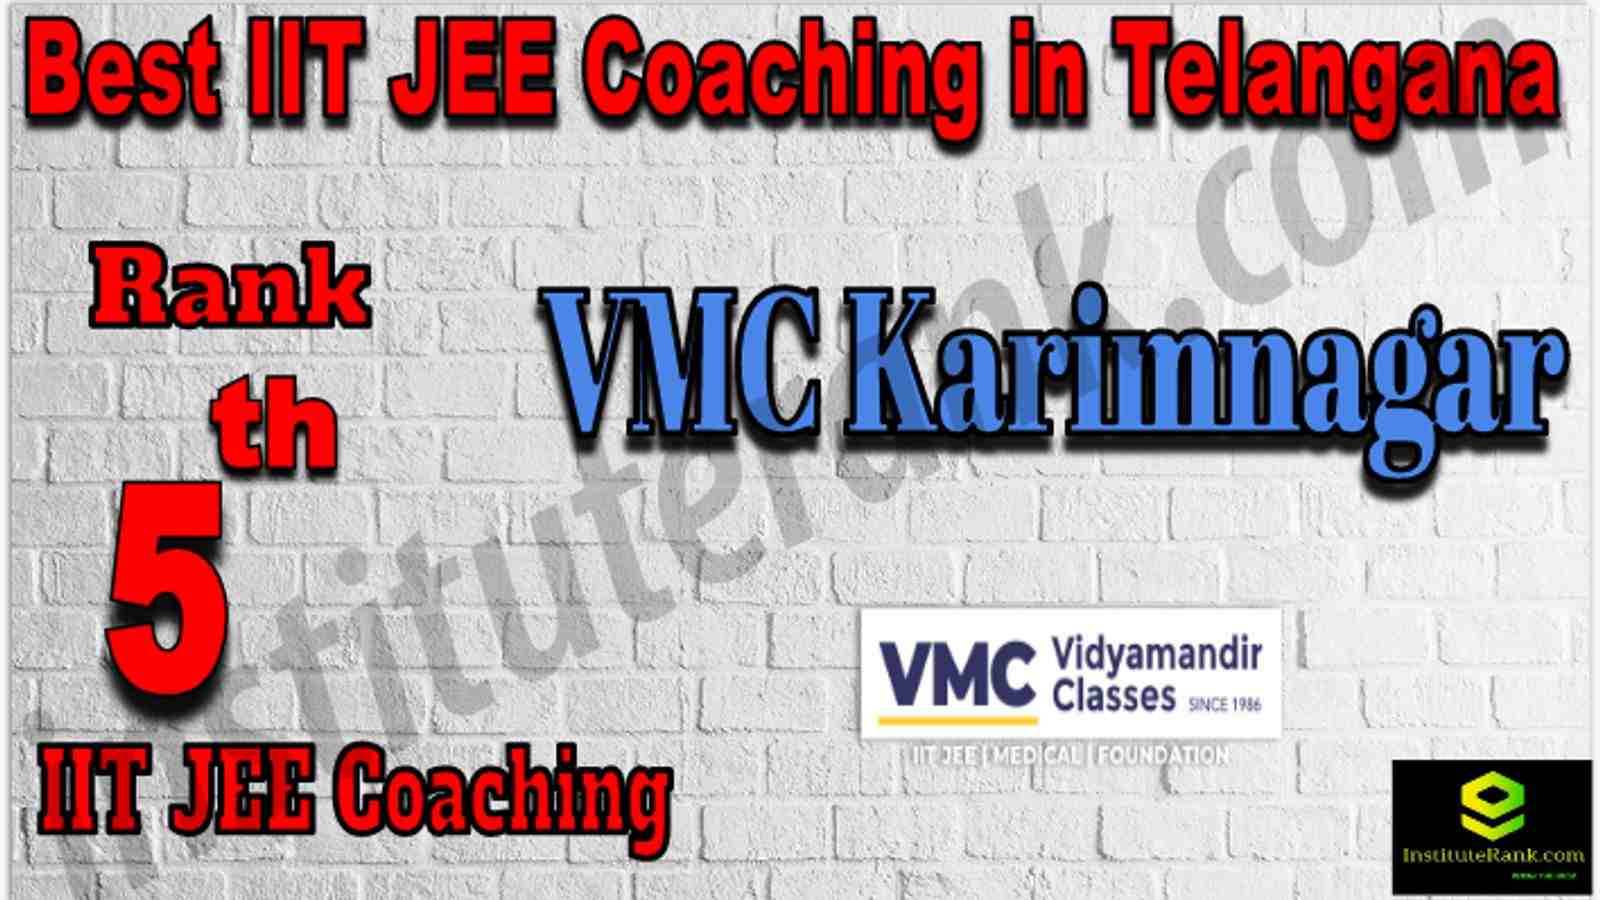 Rank 5th Best IIT JEE Coaching in Telangana